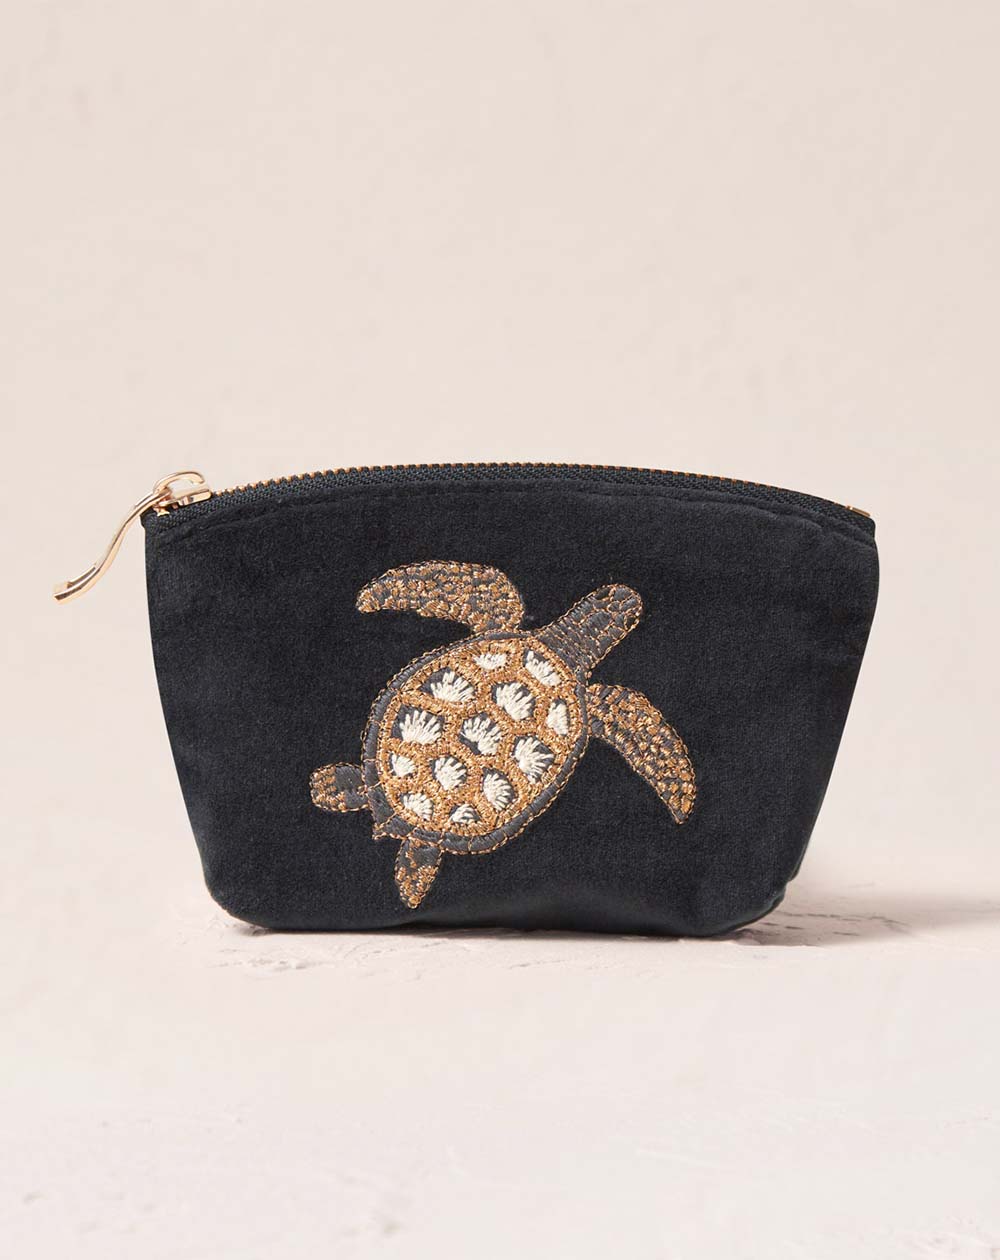 Elizabeth Scarlett - Coin Purse - Turtle Conservation (Charcoal velvet)